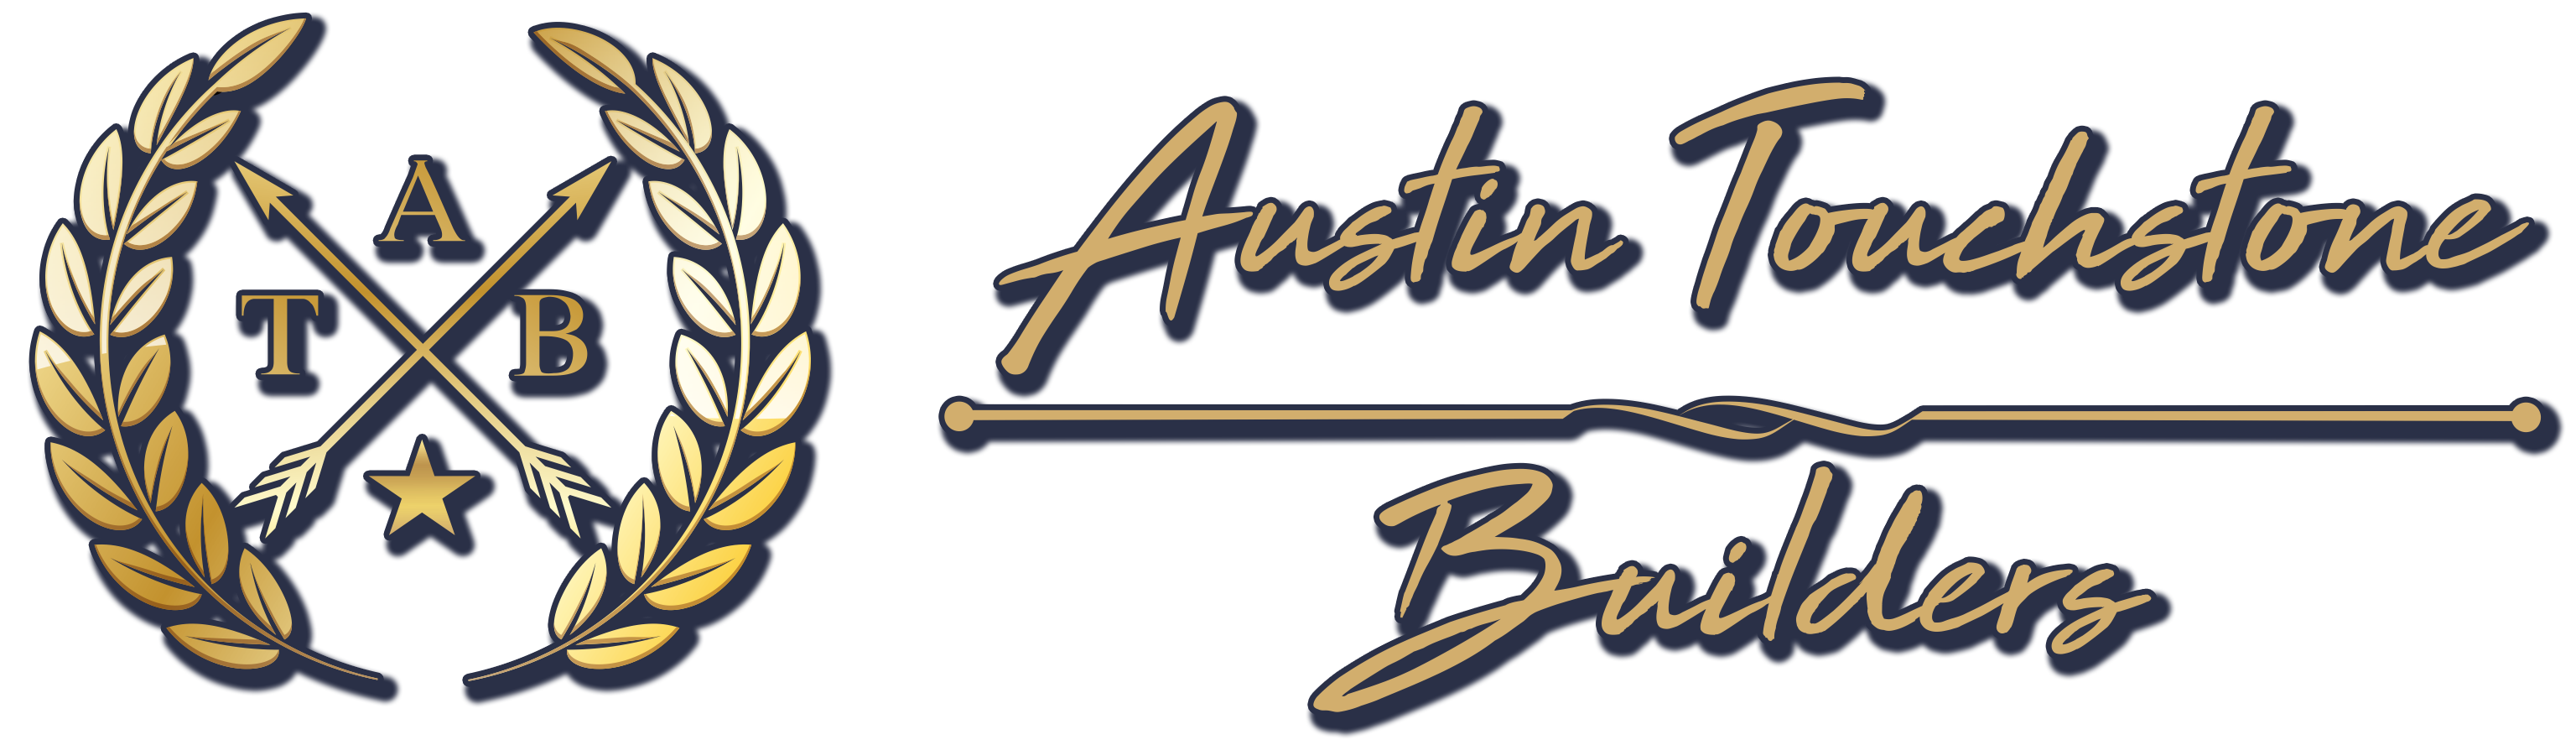 Austin TouchStone Builders LLC company logo